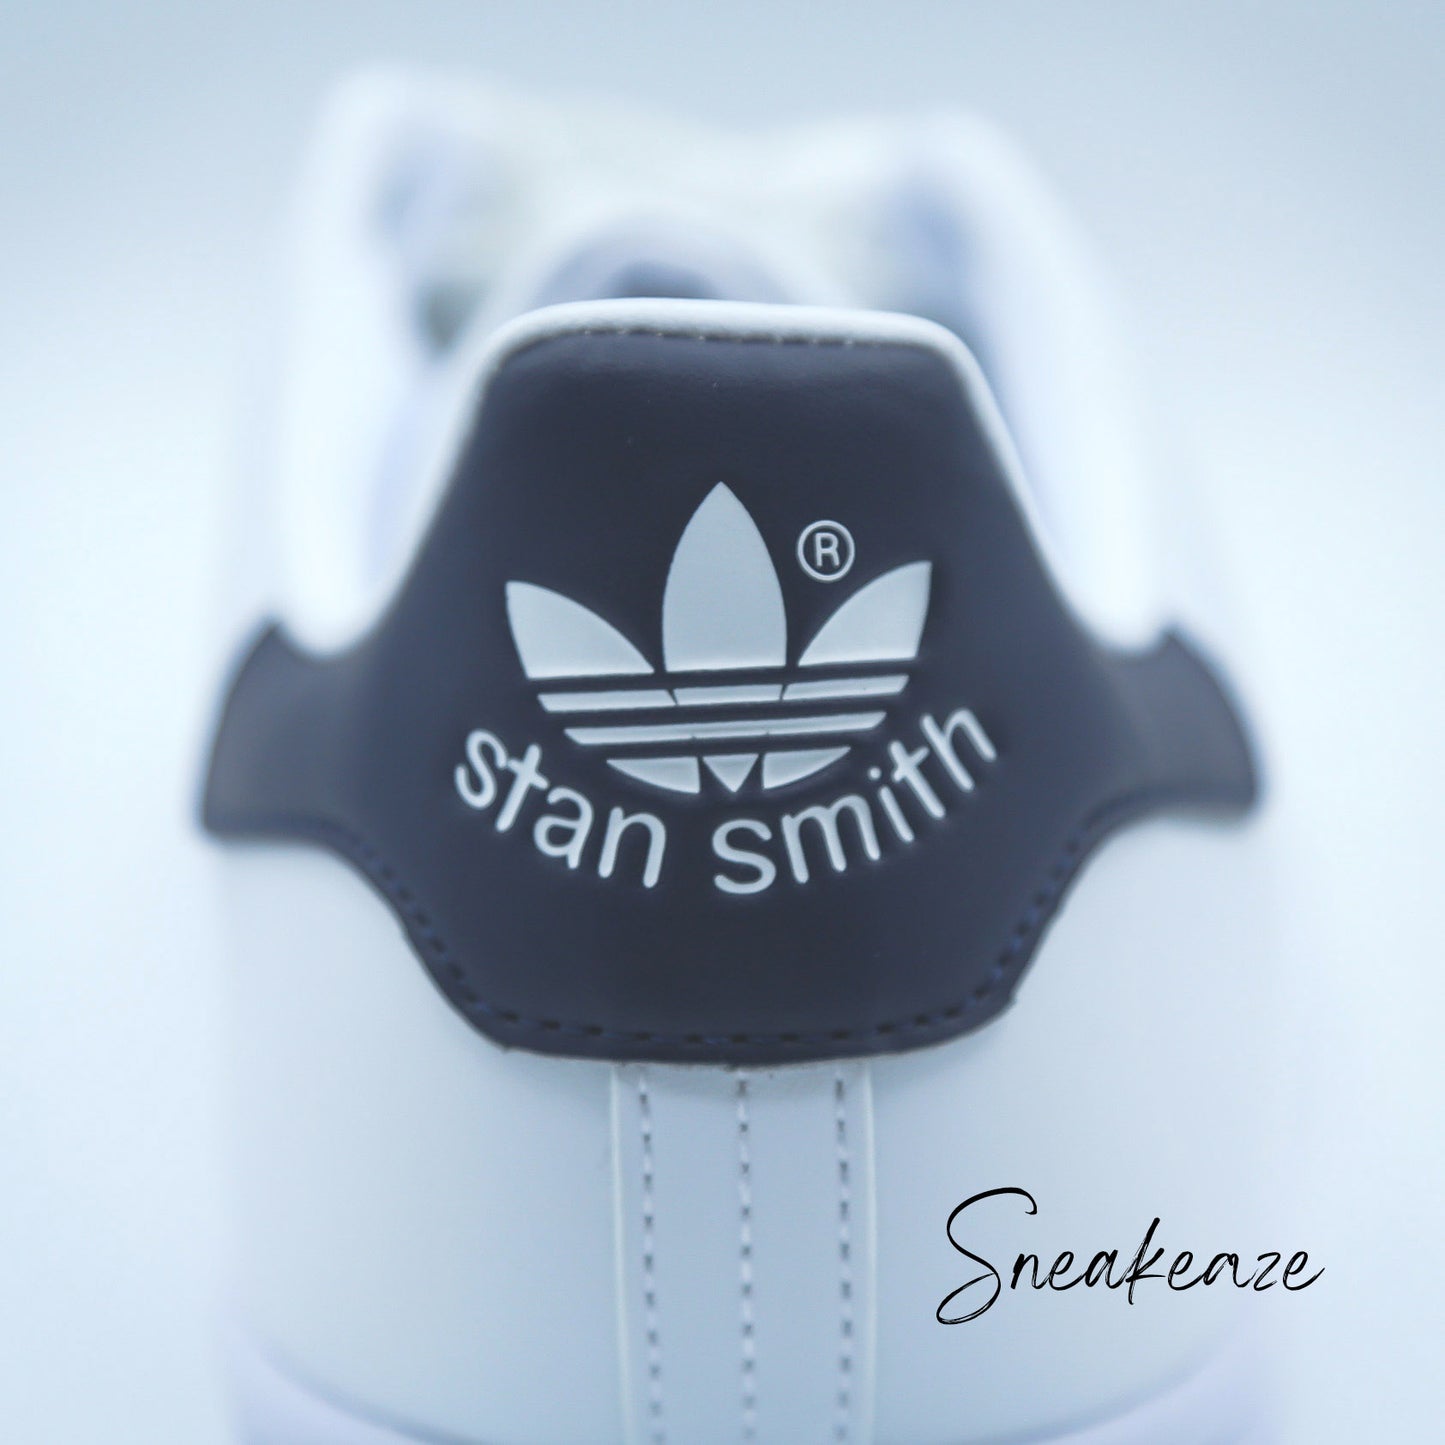 I said Yes - Stan Smith custom